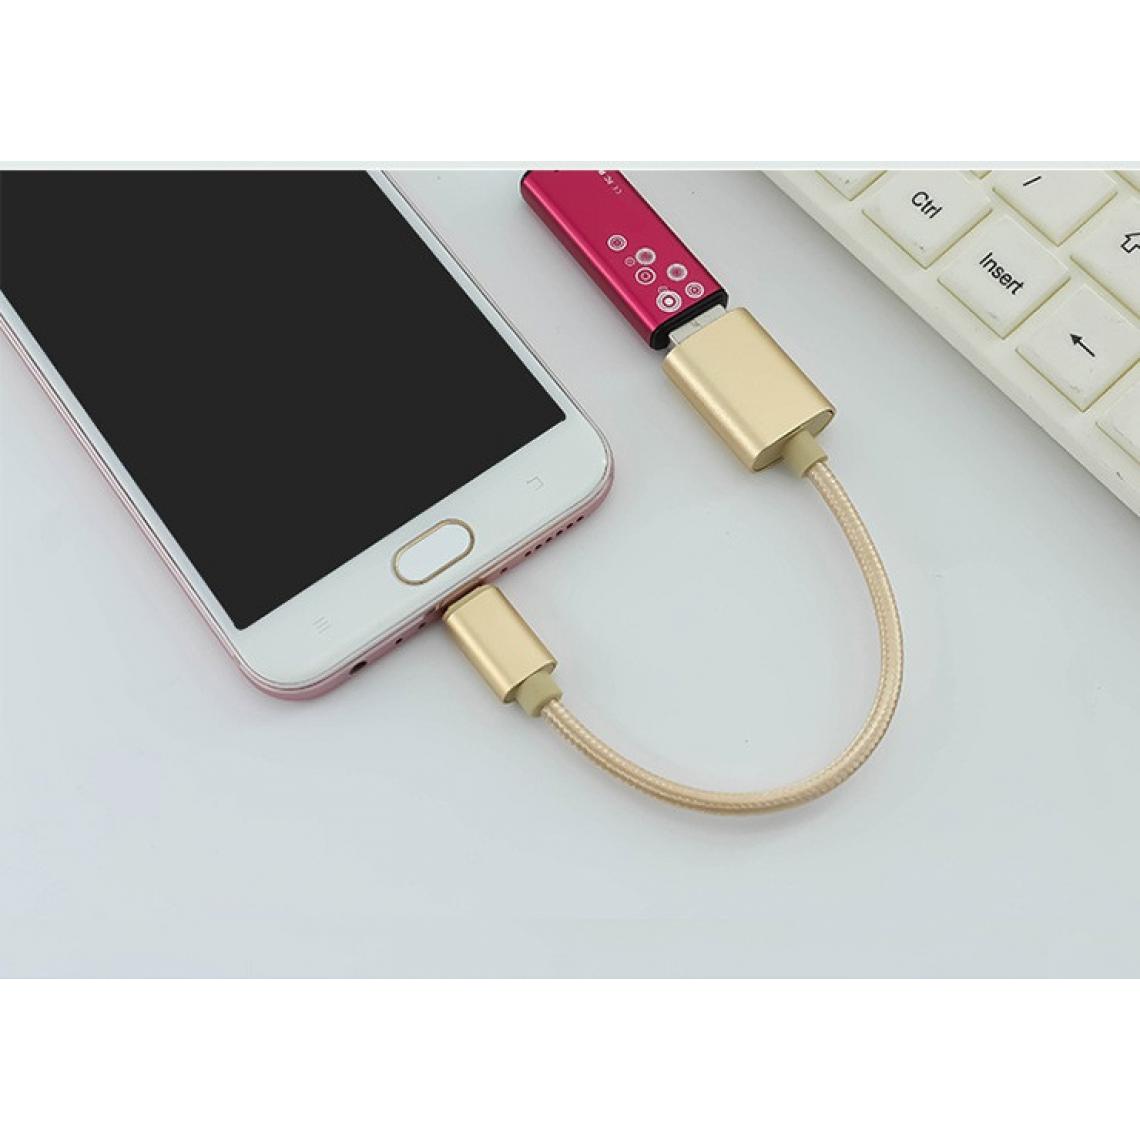 Shot - Adaptateur Type C/USB pour SAMSUNG Galaxy A51 Smartphone & MAC USB-C Clef (OR) - Autres accessoires smartphone